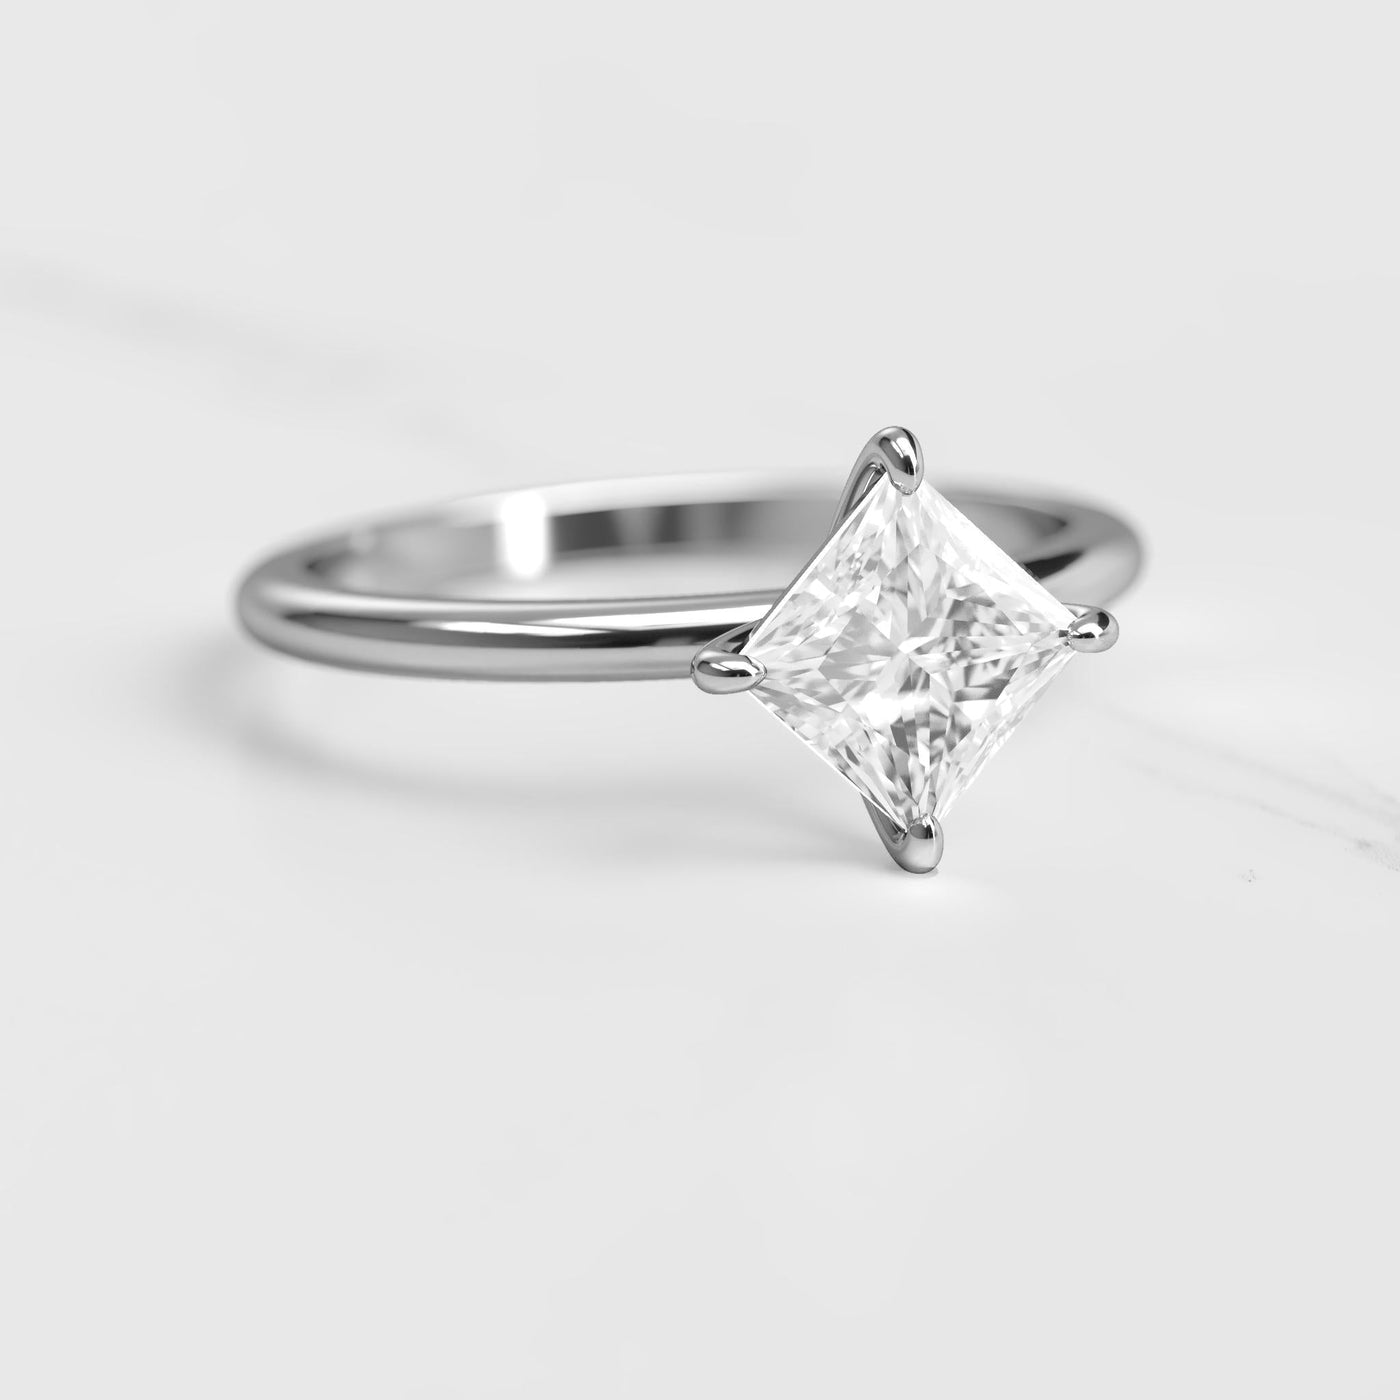 Princess-cut solitaire diamond ring